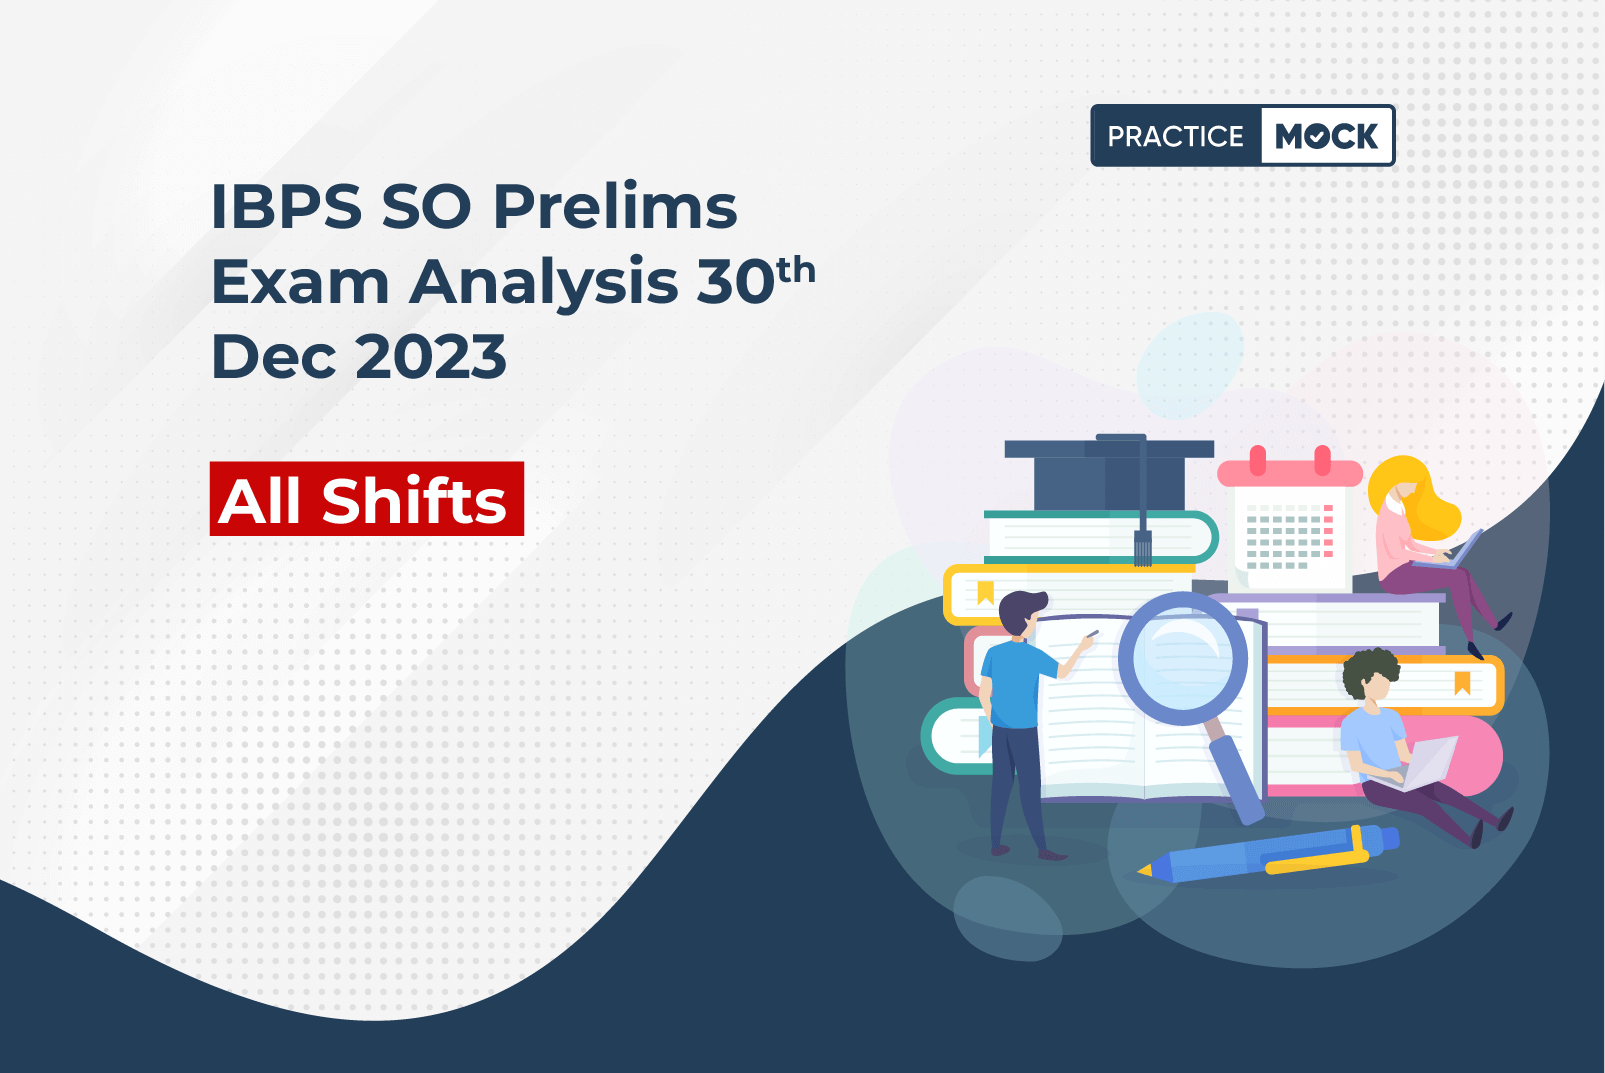 IBPS SO Prelims Exam Analysis 30th Dec 2023 - All Shifts